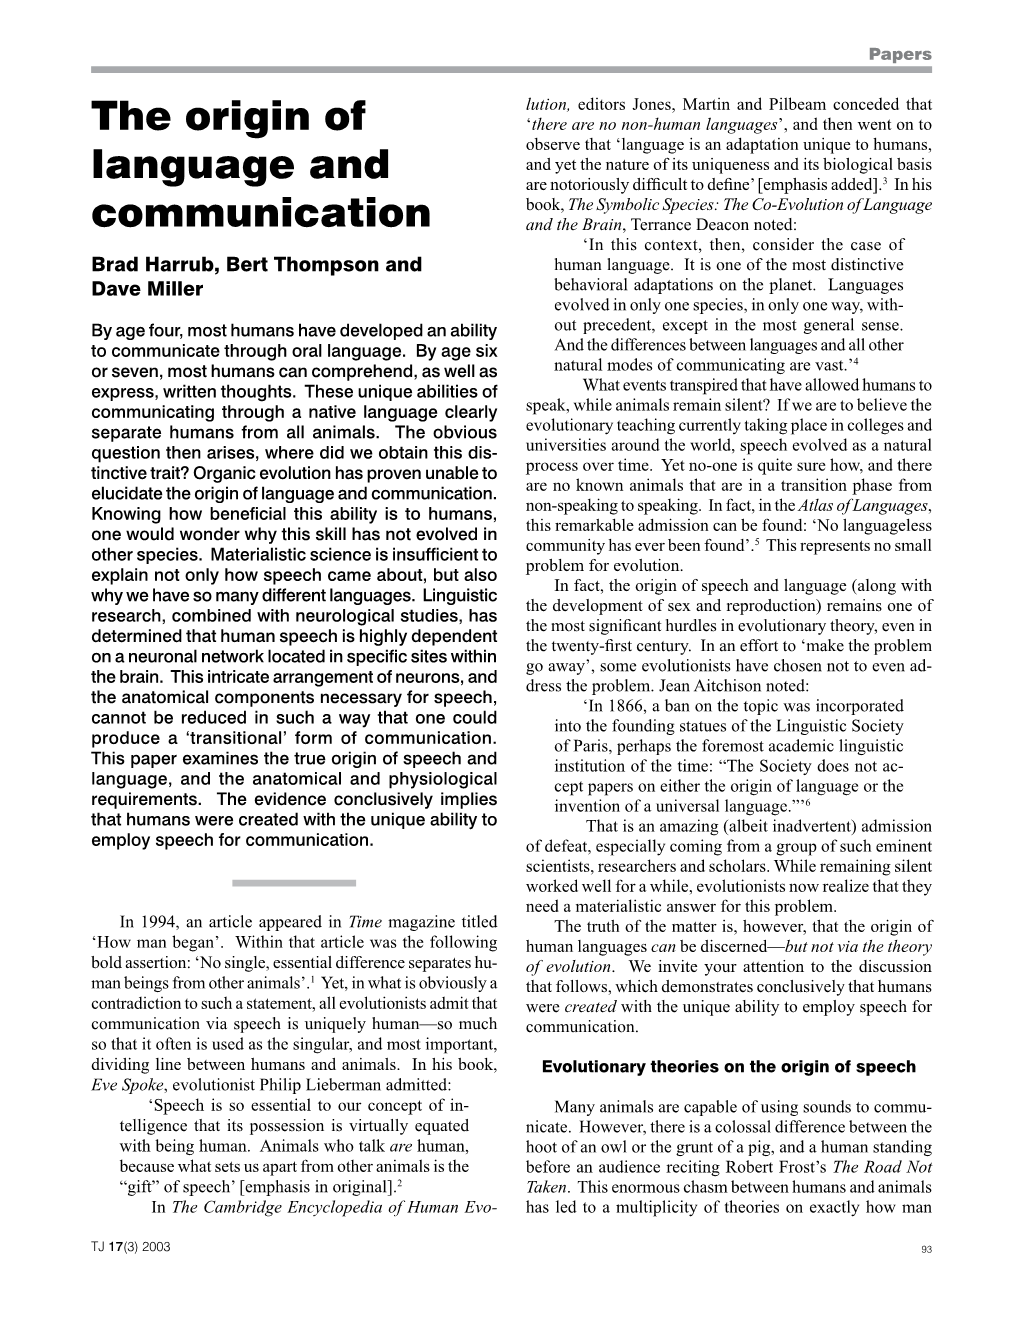 Harrub, Brad Adn Et Al. "The Origin of Language and Communication"